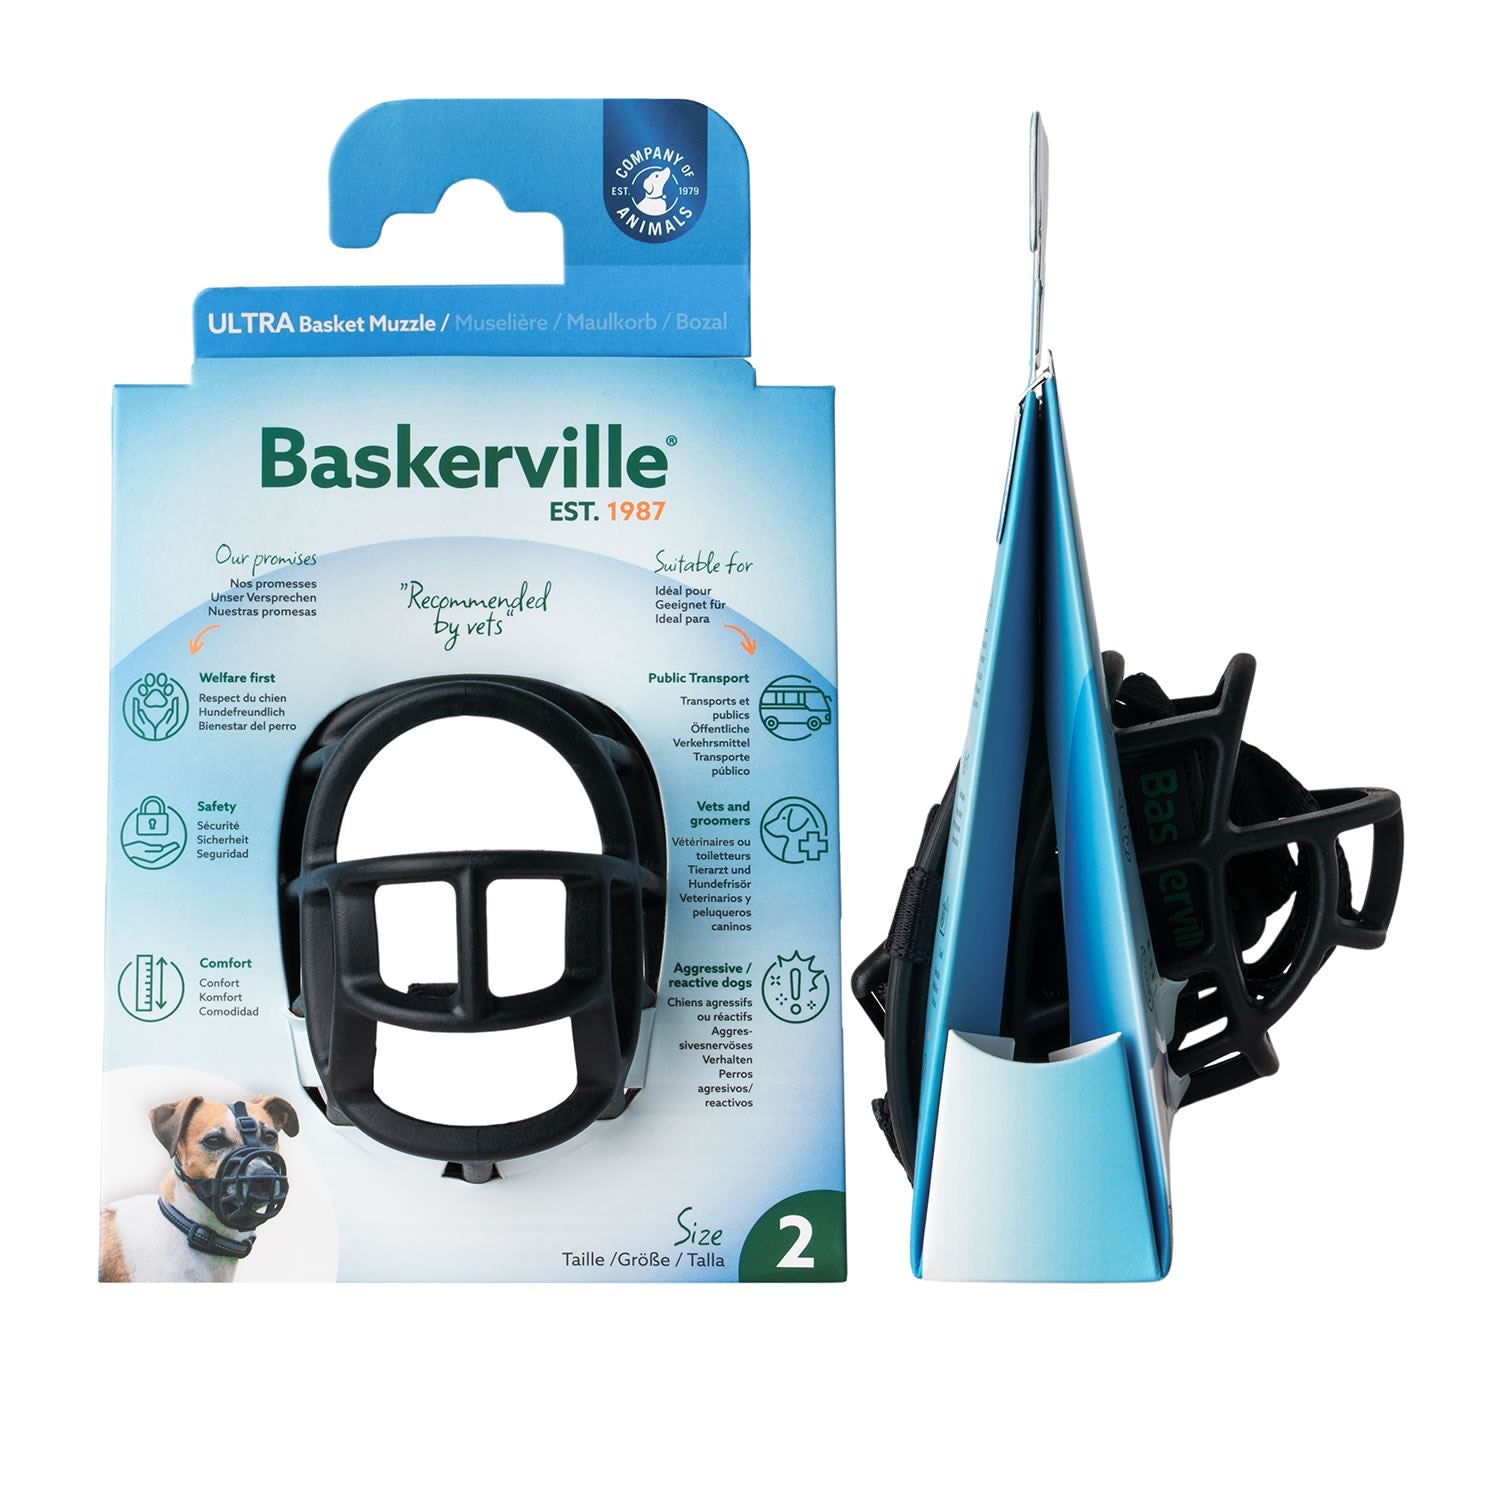 Baskerville Ultra Basket Muzzle - Just Horse Riders